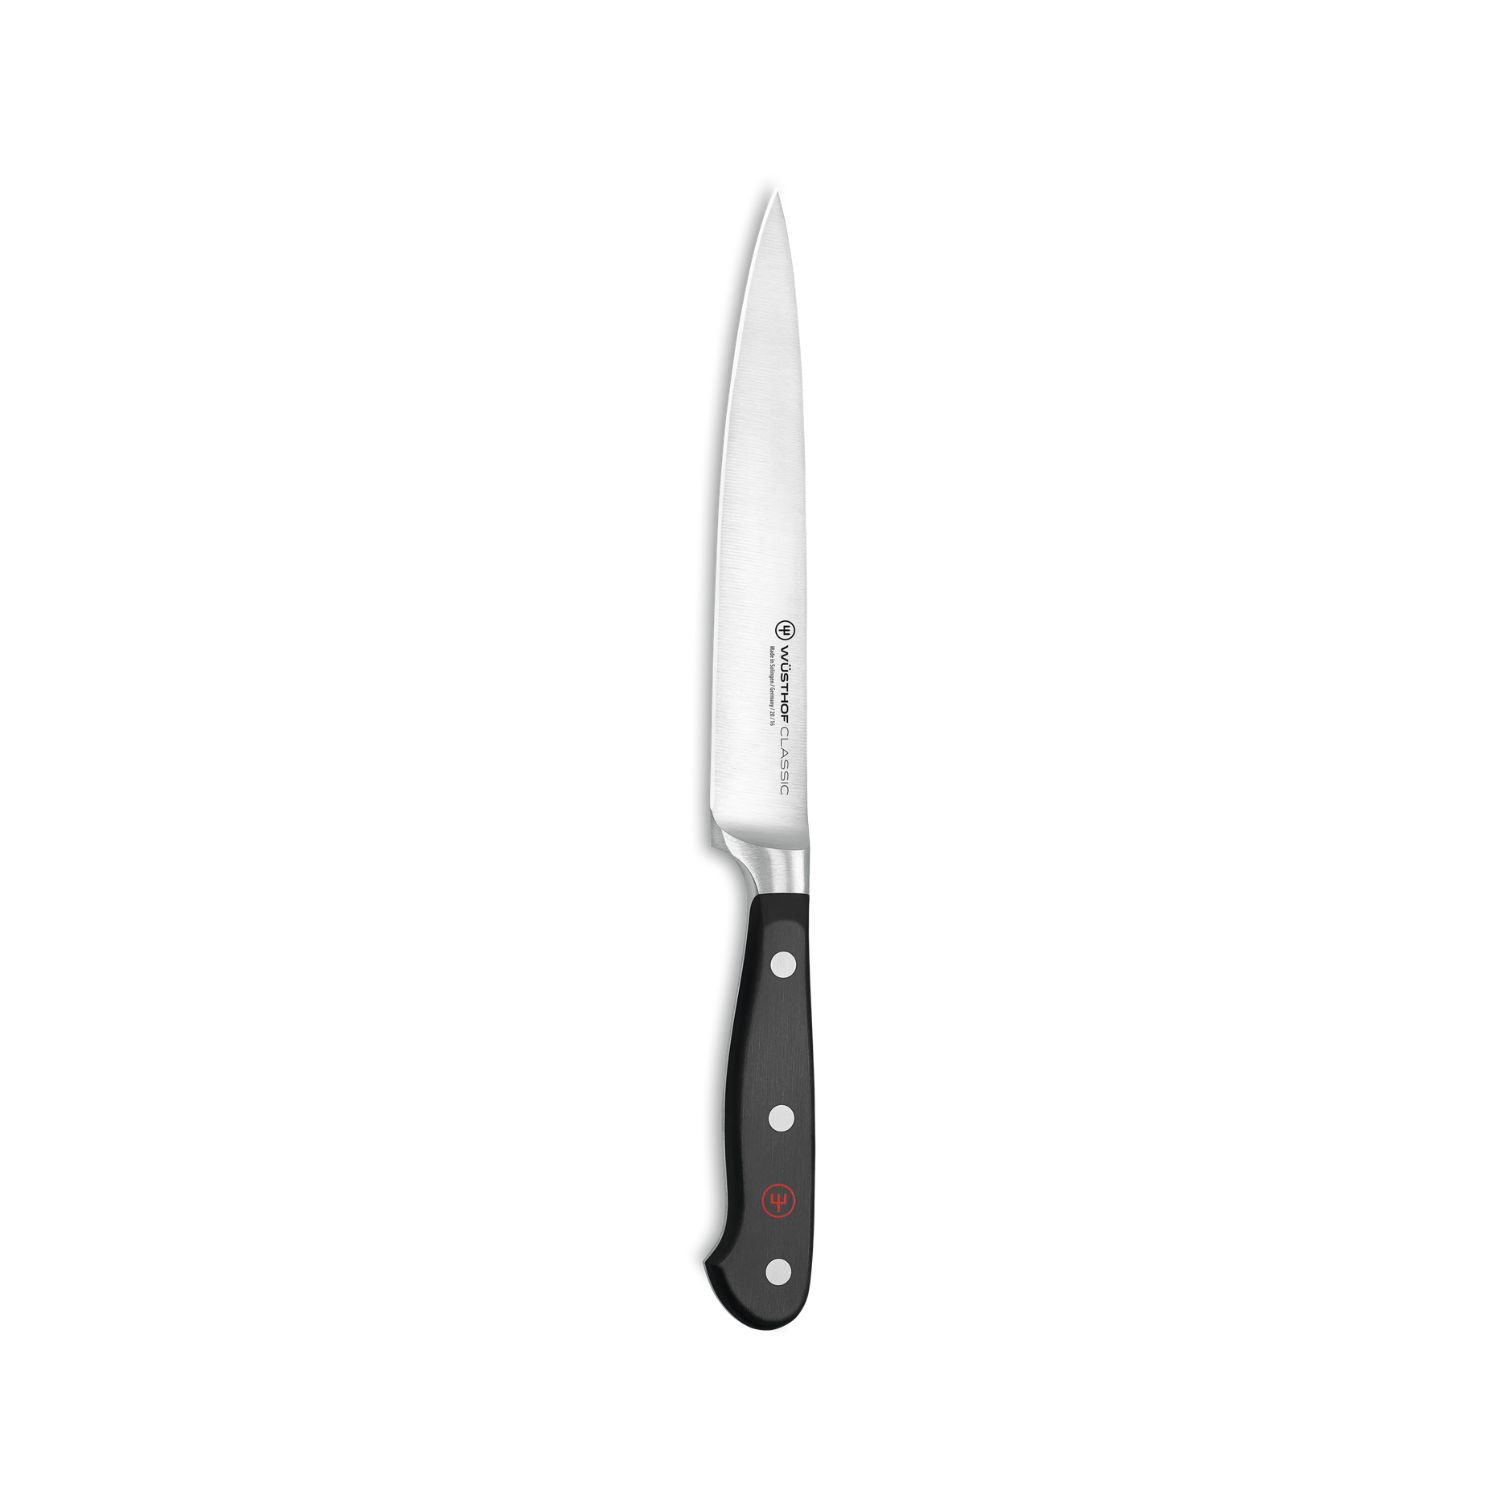 Wusthof Classic Fillet Knife 16cm